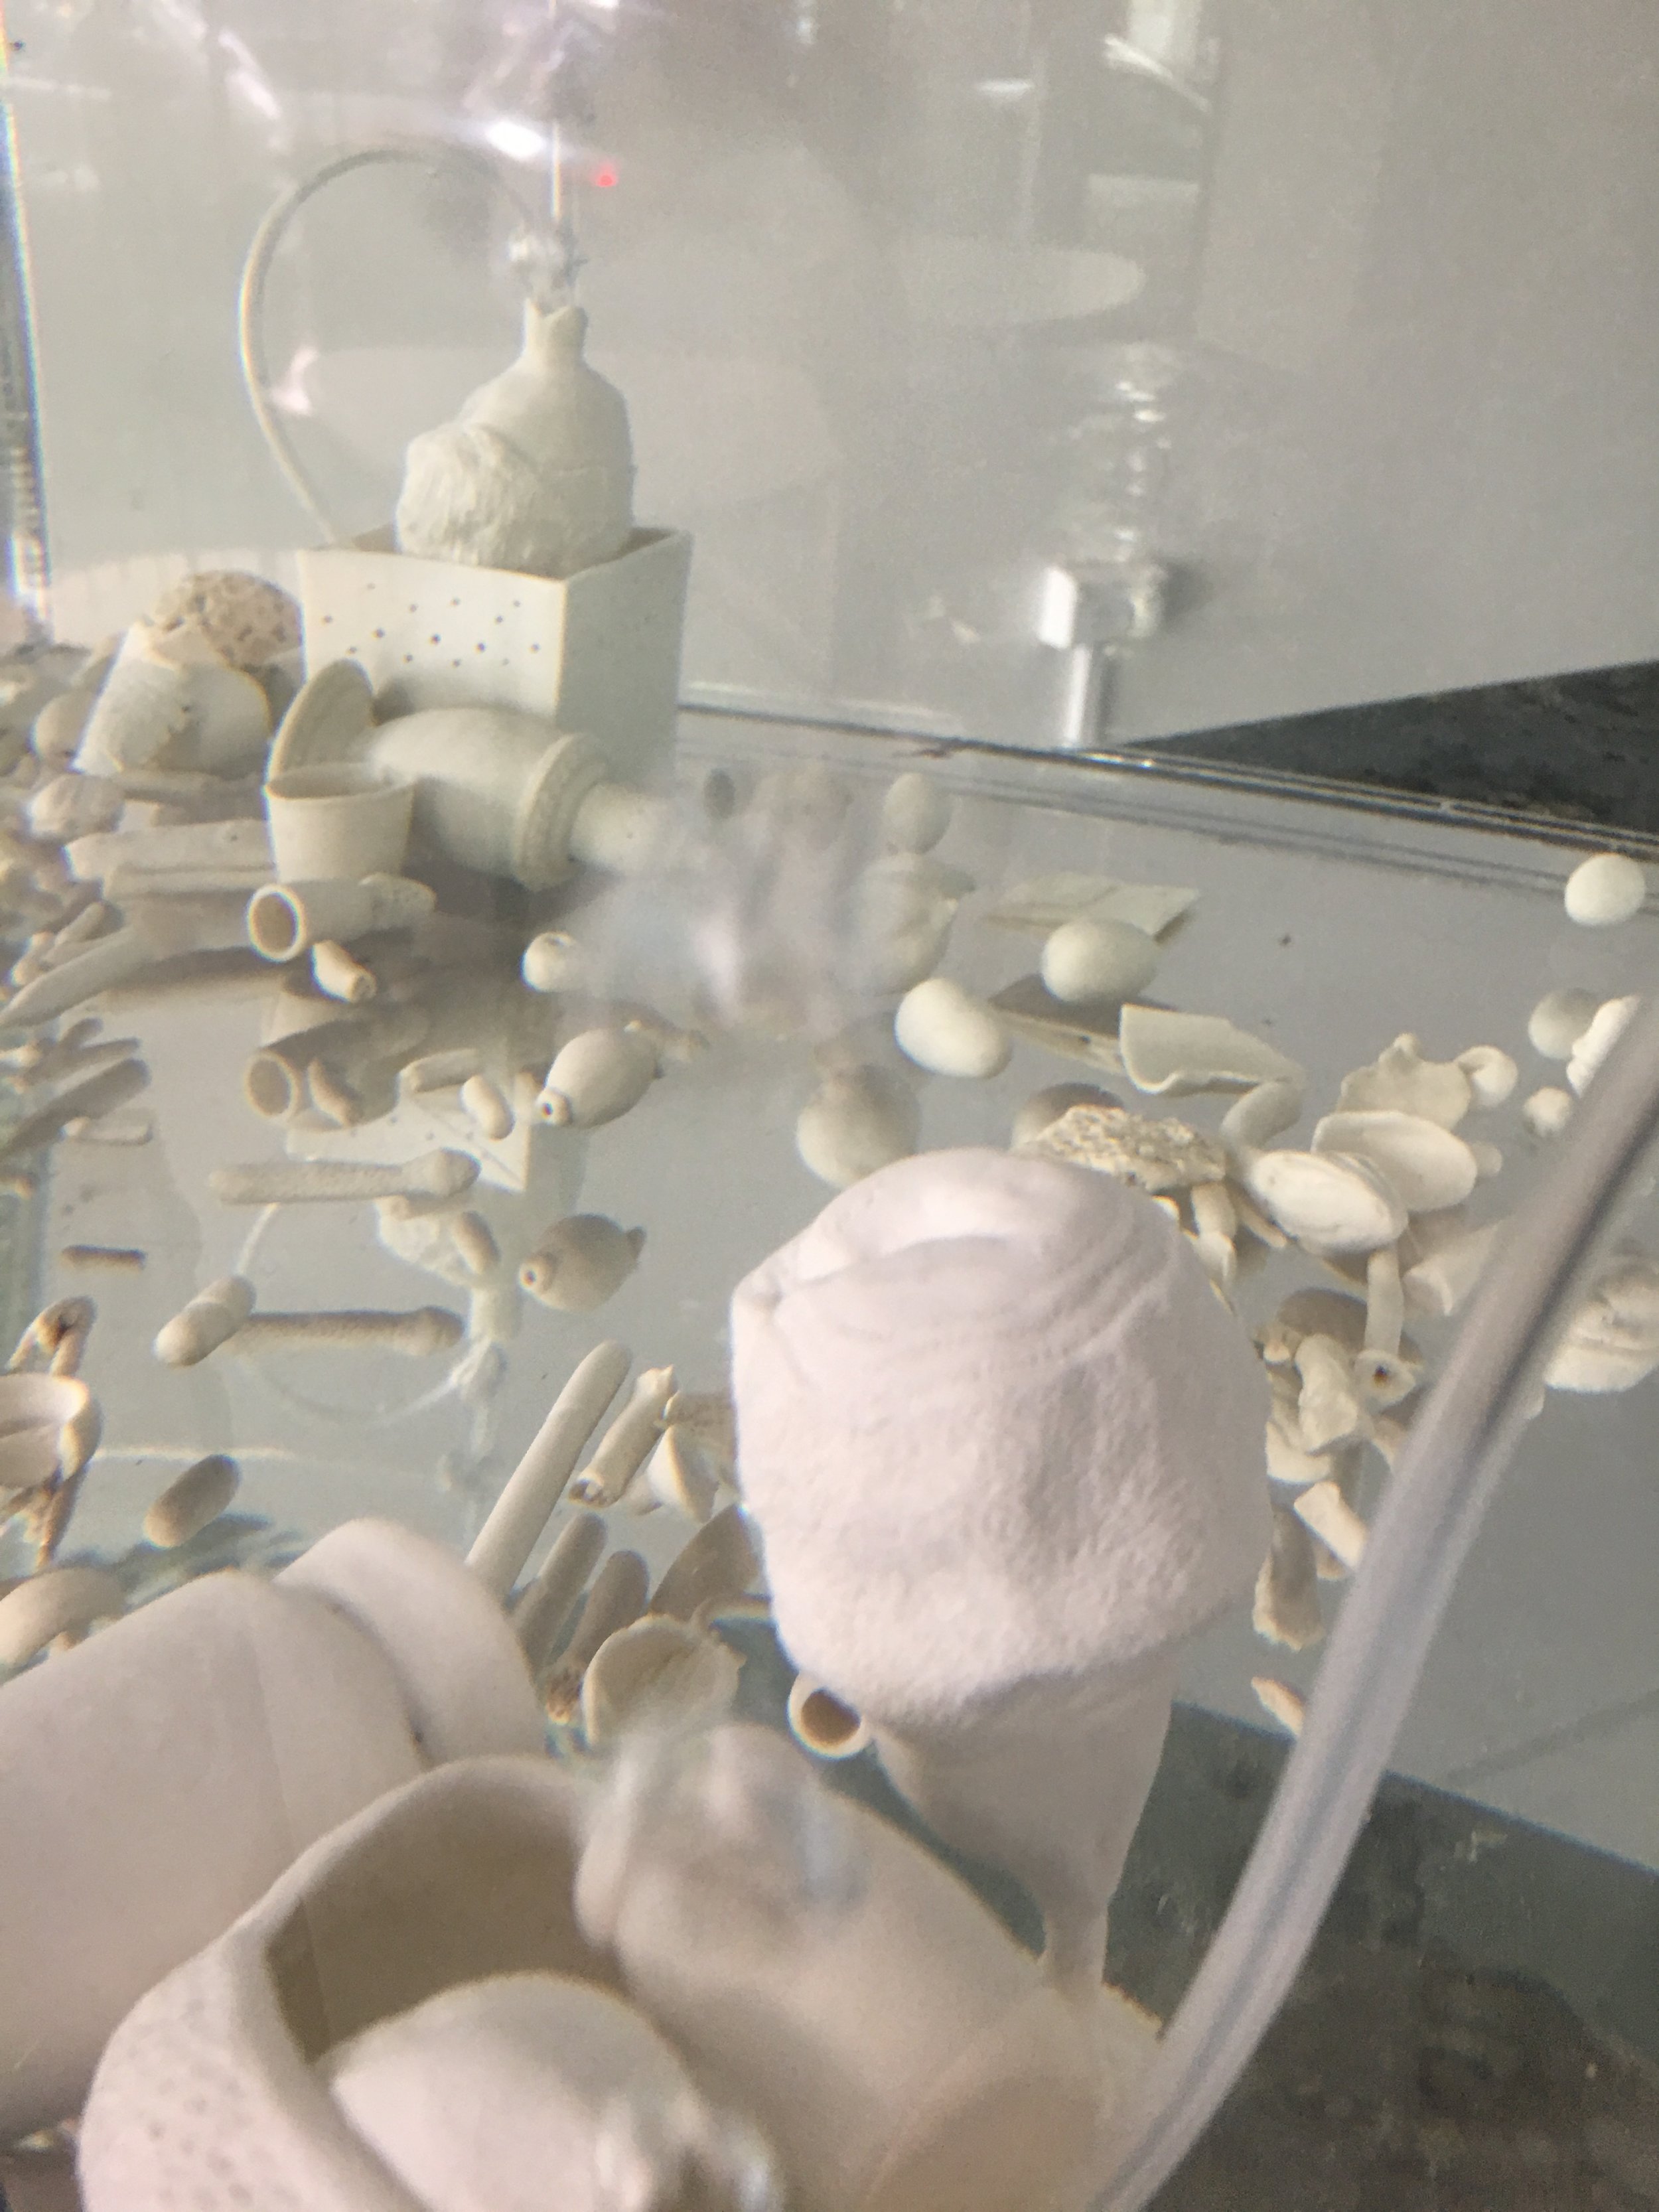  Carol Hudson  Intertidal Aquarium II  2018 (Detail) Porcelain, water, air pumps, silicon tubing and acrylic box. 60 x 60 x 60 cm. 